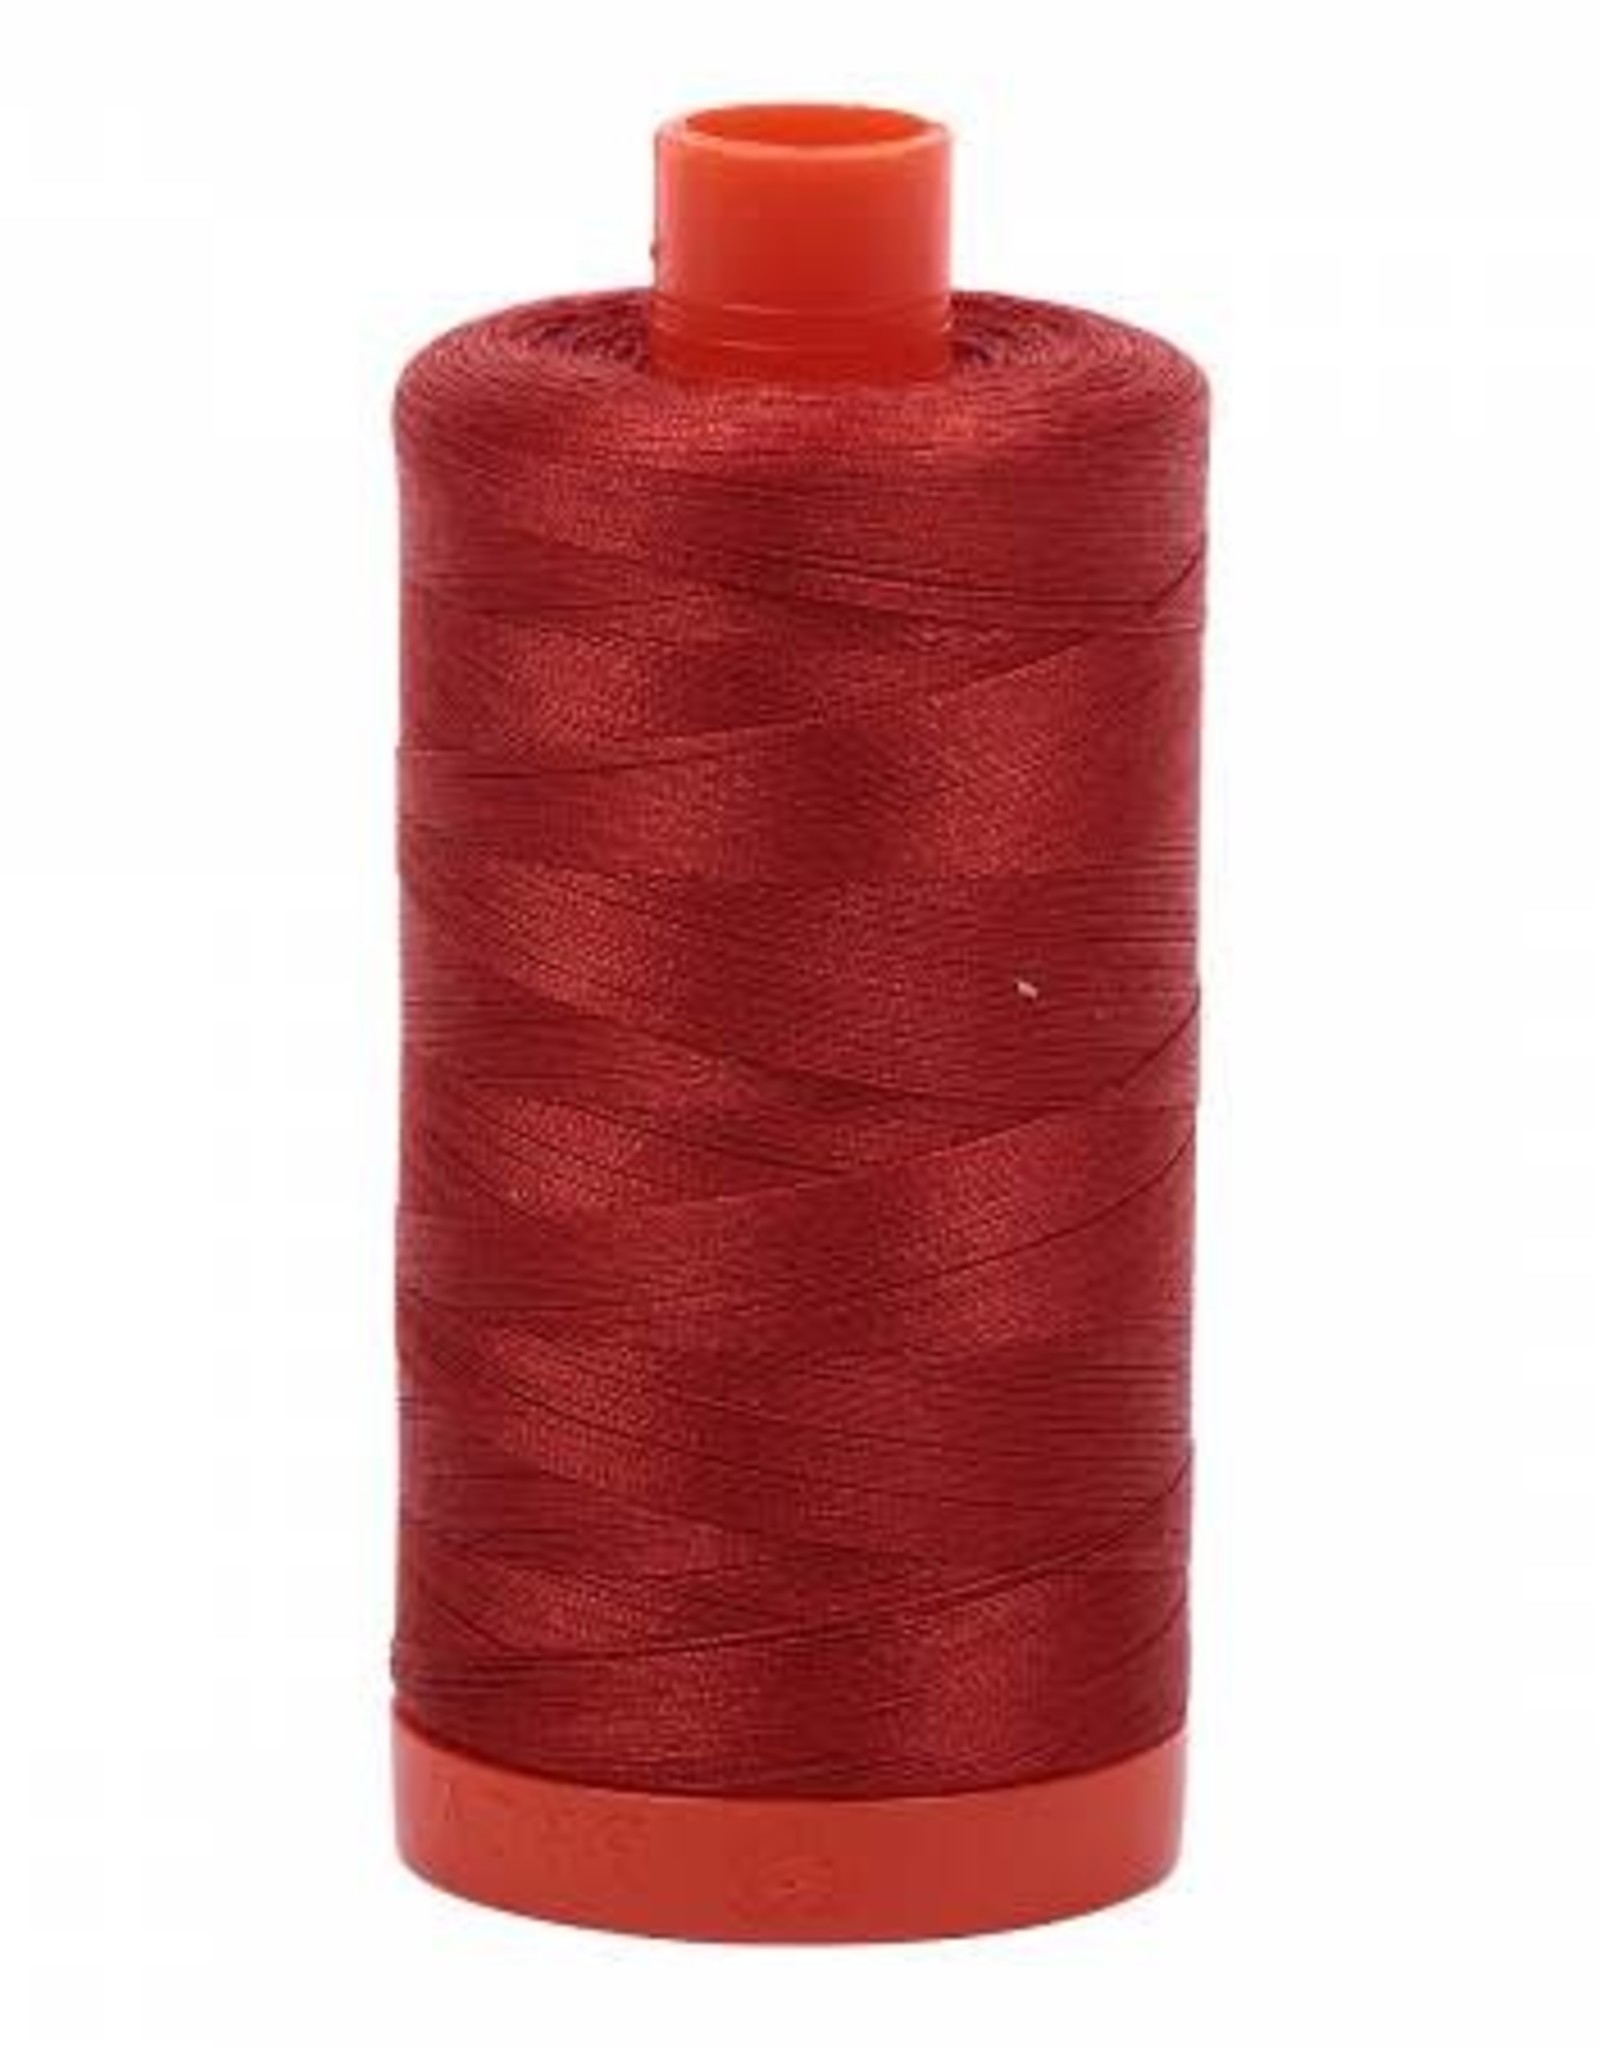 Mako Cotton Thread Solid 50wt - Pumpkin Spice (2395)